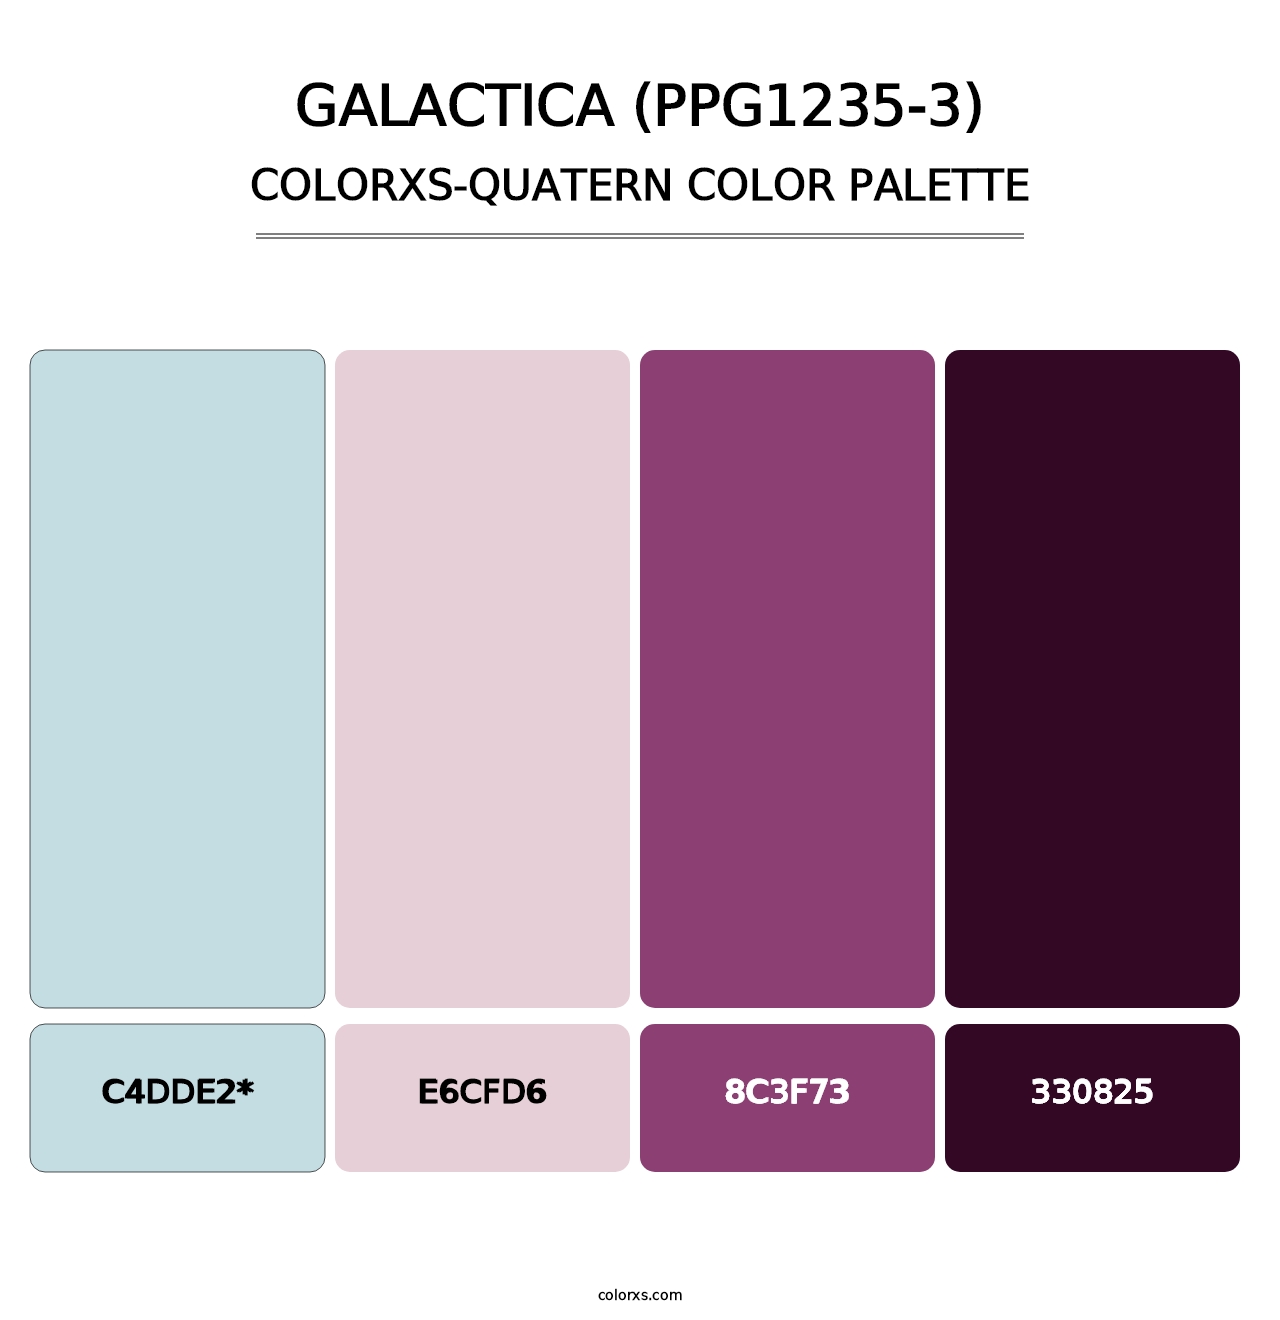 Galactica (PPG1235-3) - Colorxs Quatern Palette